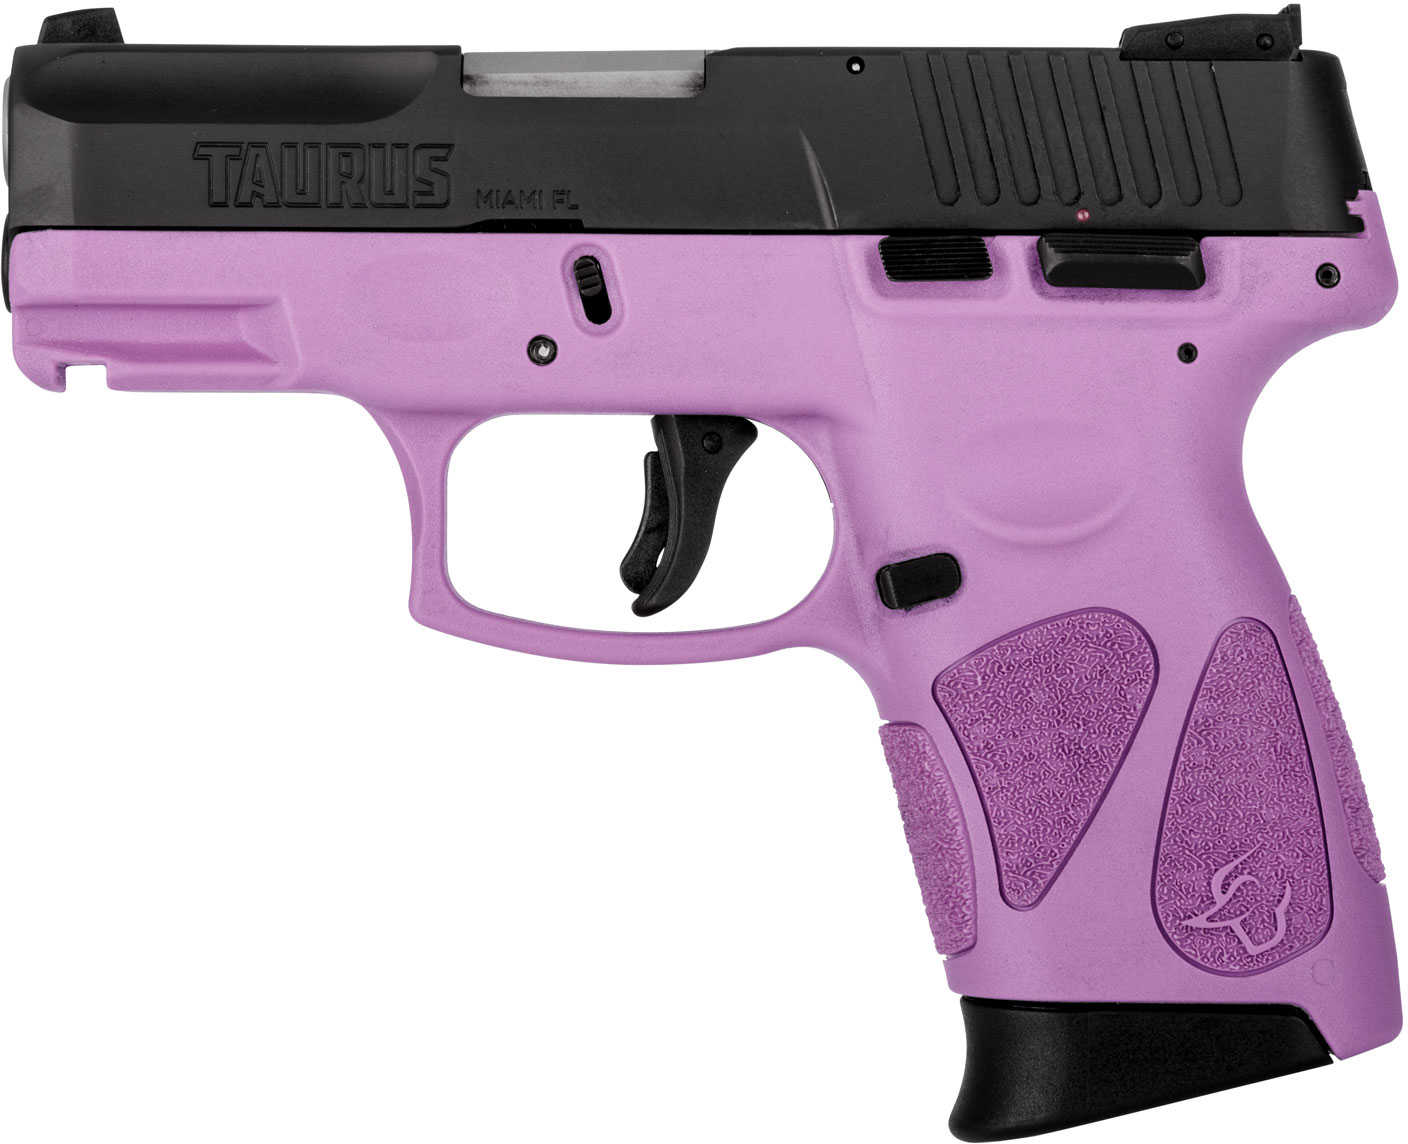 Taurus G2C Pistol 9mm 3.25" Barrel 12 Round Capacity Black Carbon Steel Slide Light Purple Polymer Grip